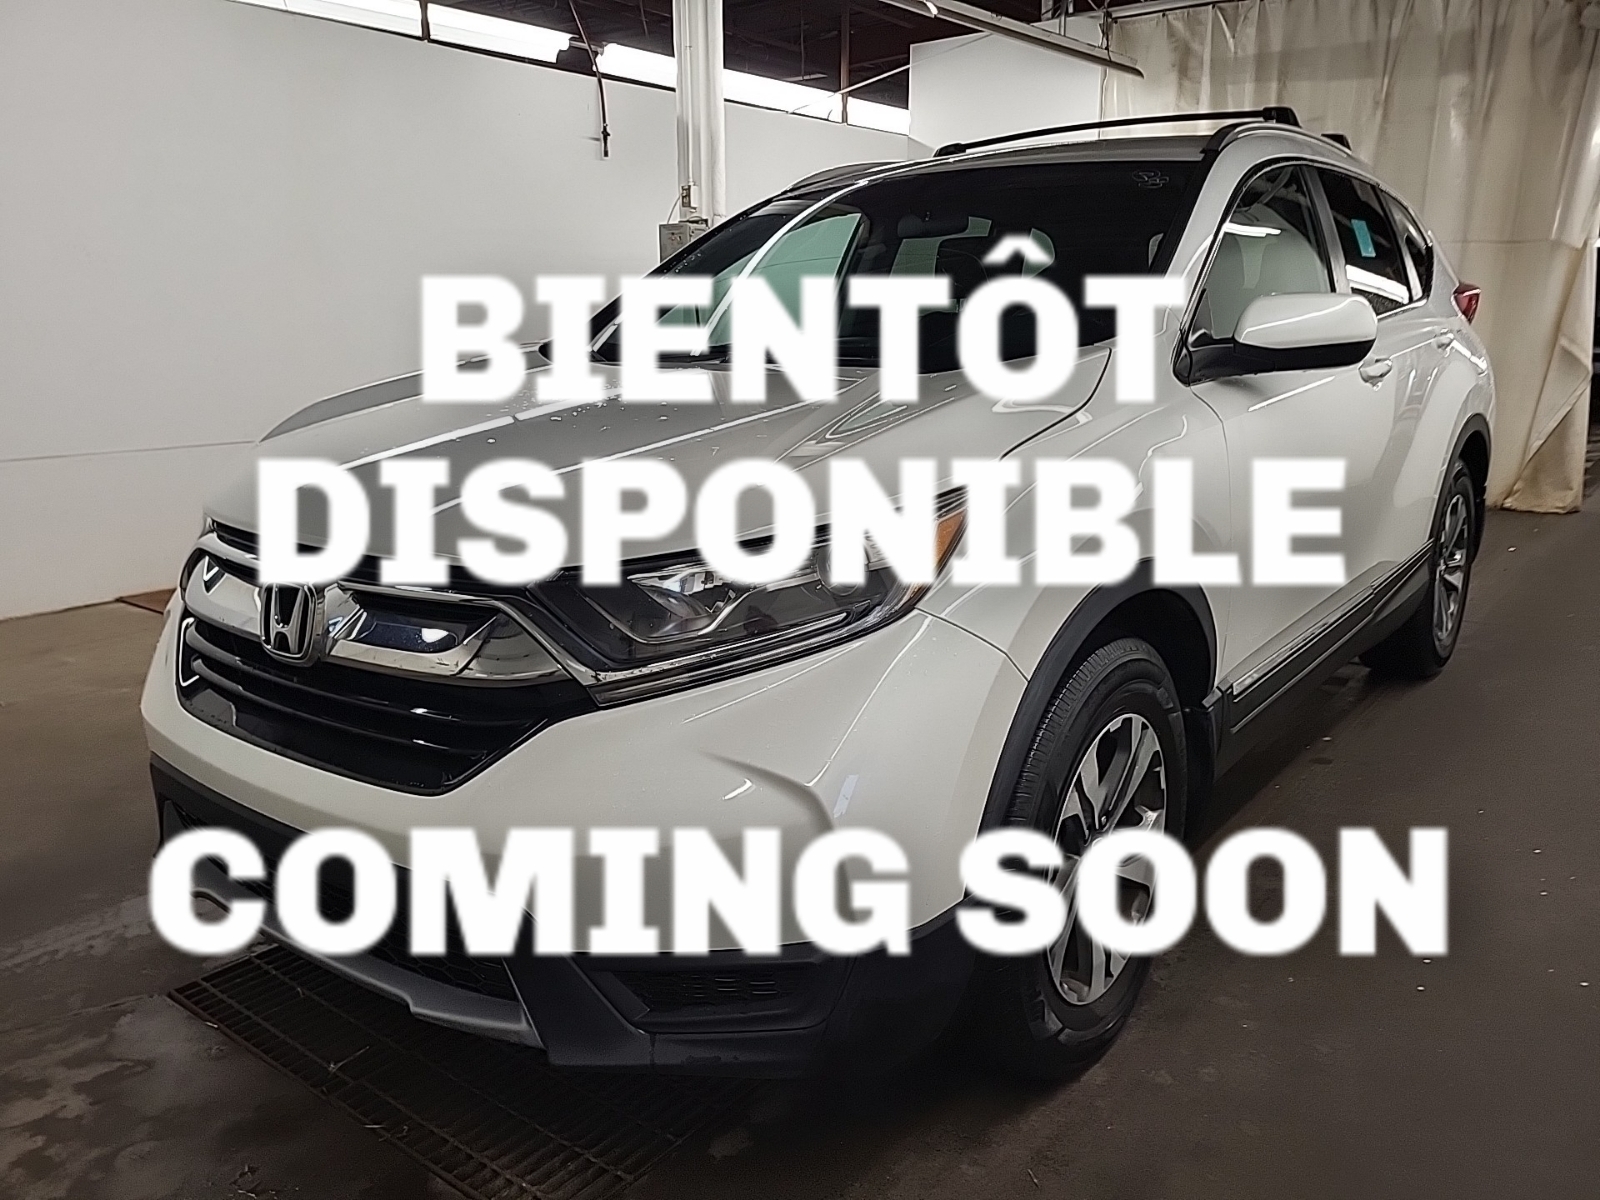 2019 Honda CR-V LX 2WD